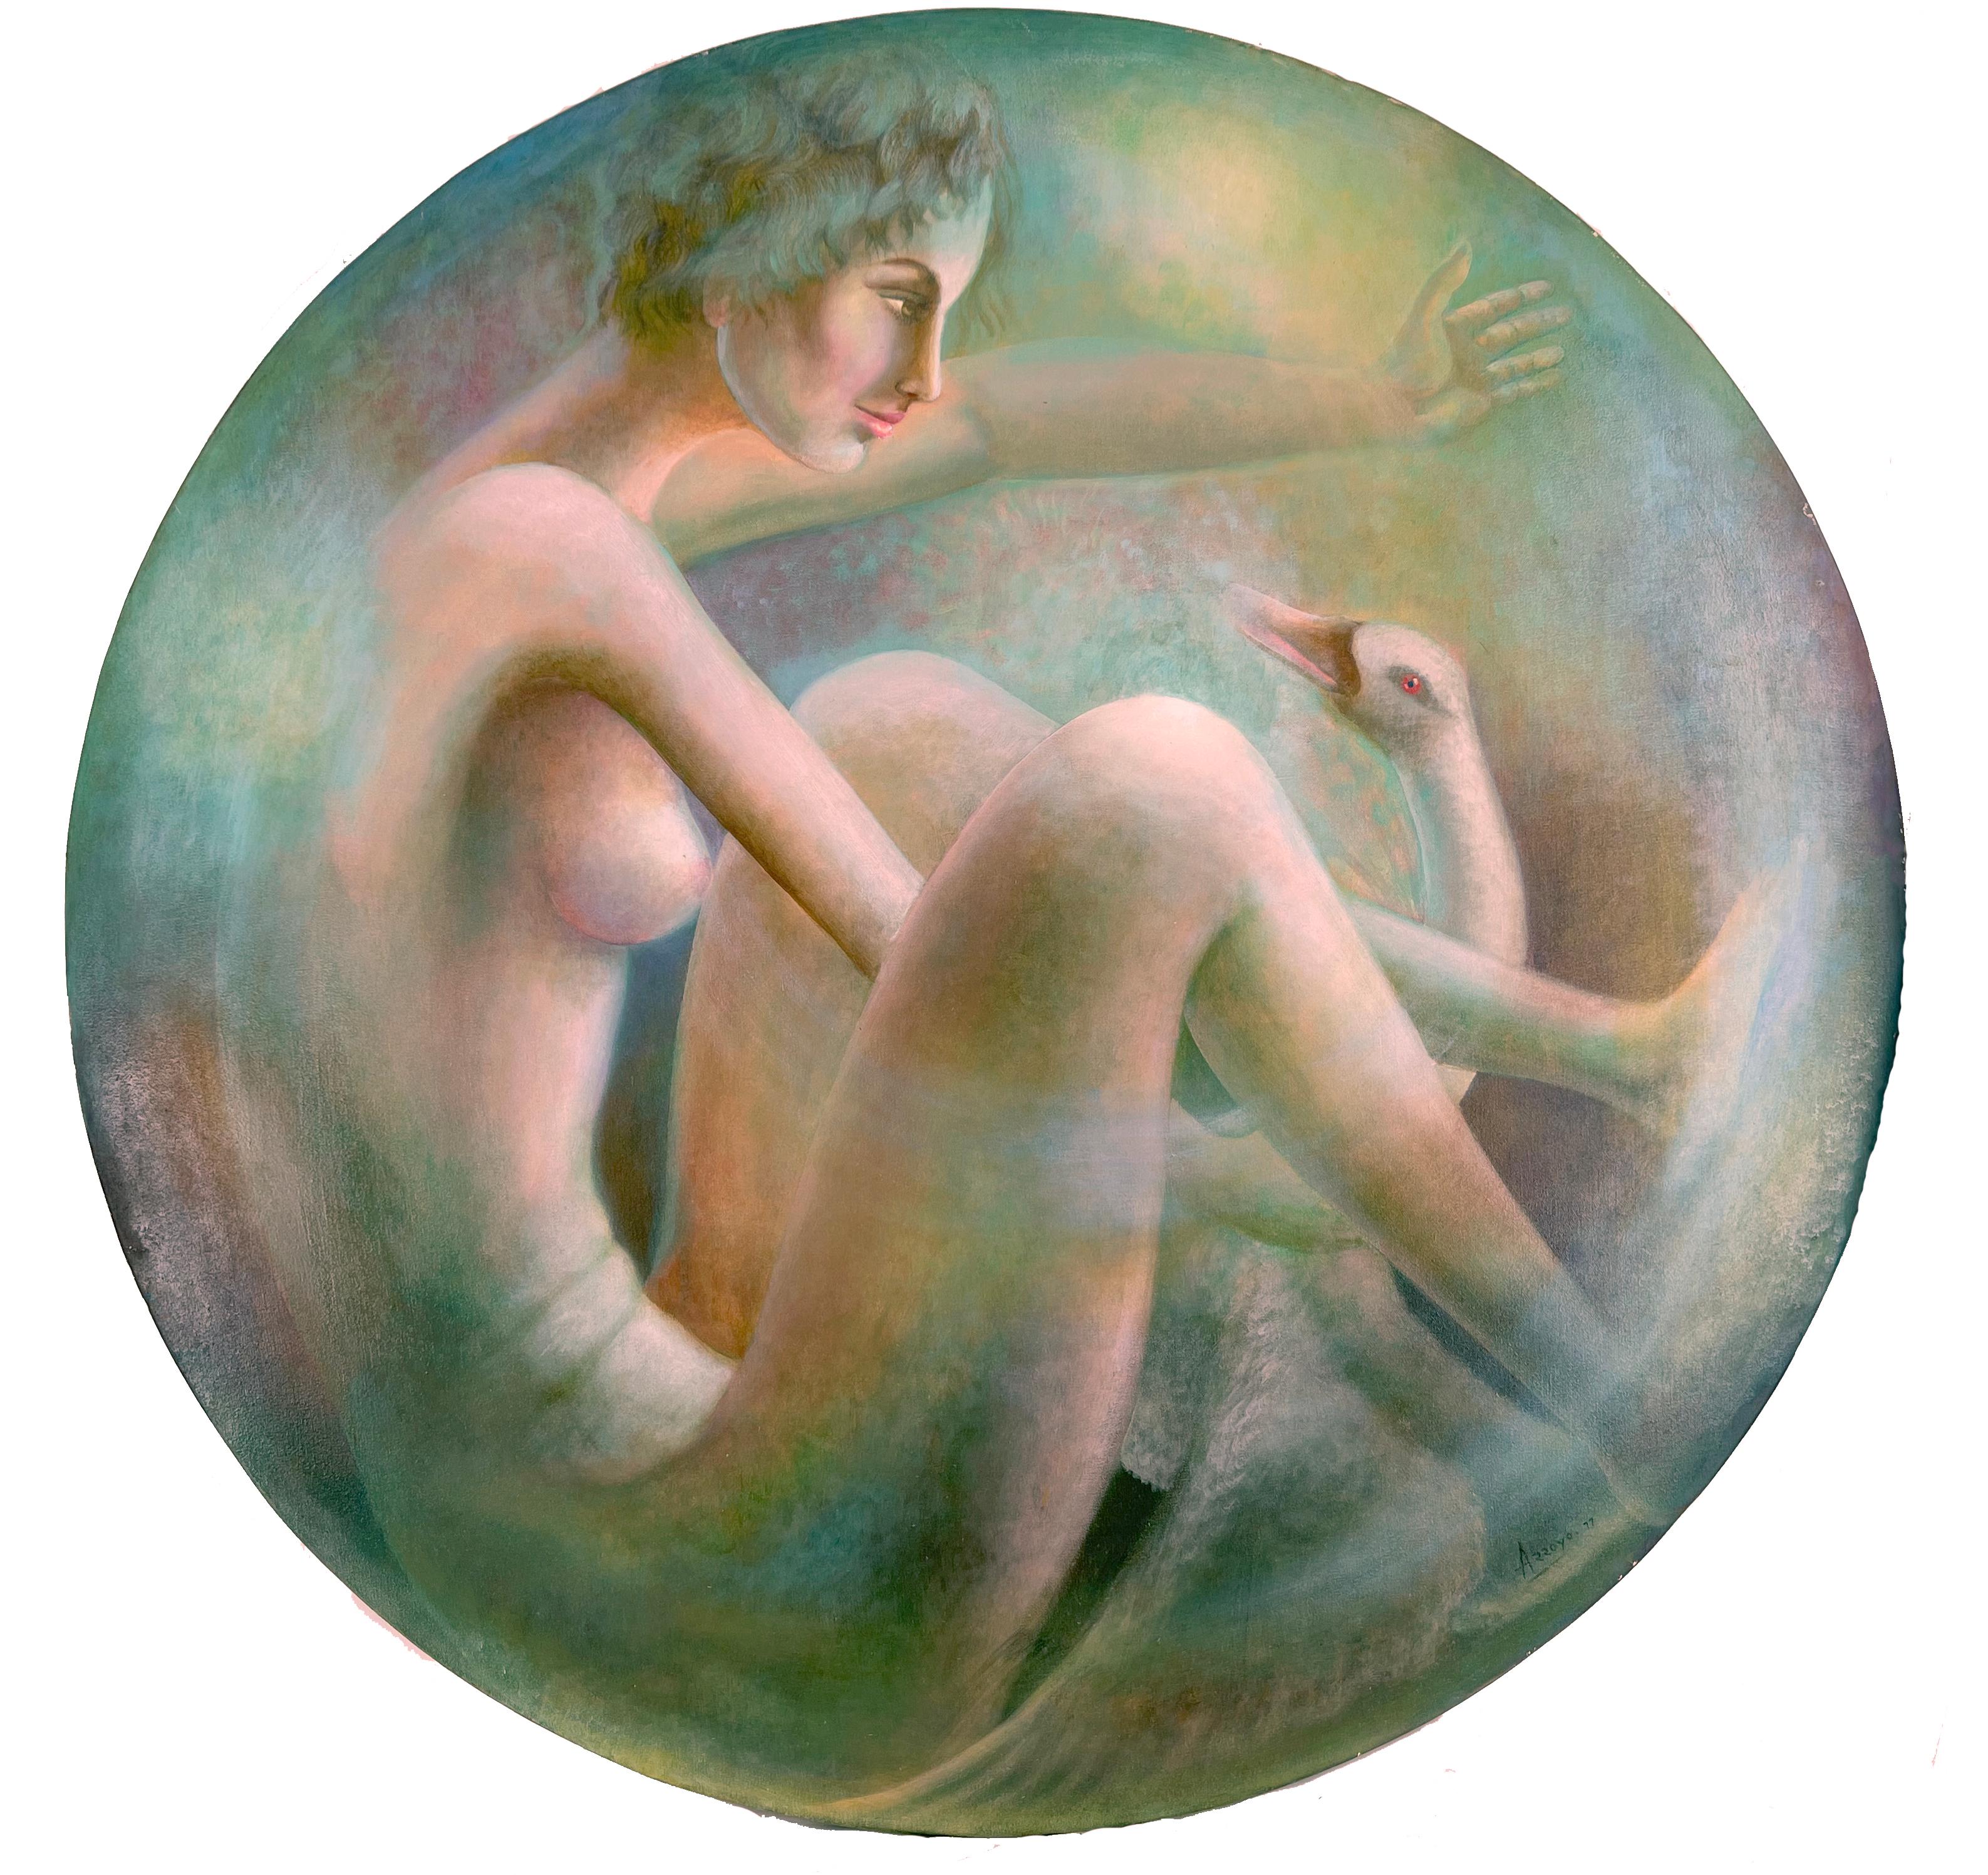 Jose Garcia Arroyo Figurative Painting - Figurative Nude with Swan Circular Oil on Canvas 